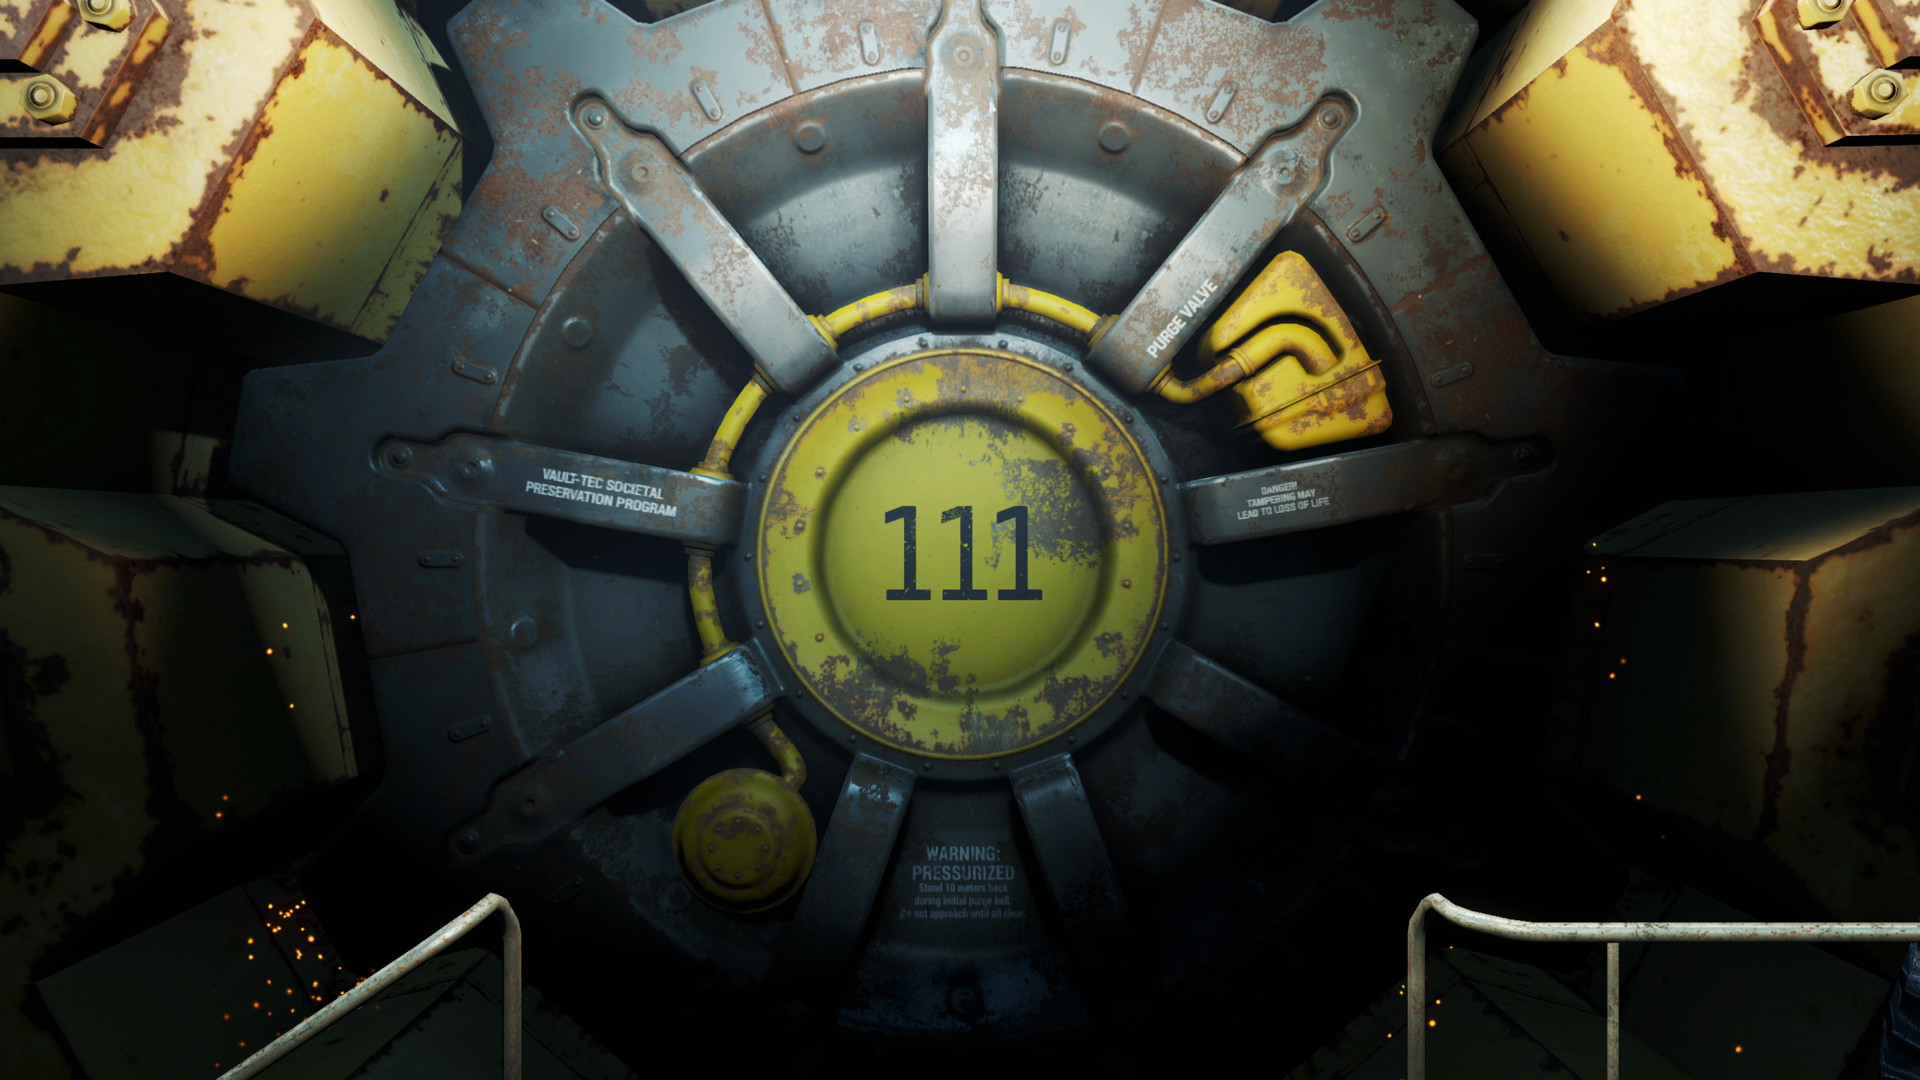 Fallout 4 vault door with '111' written onit